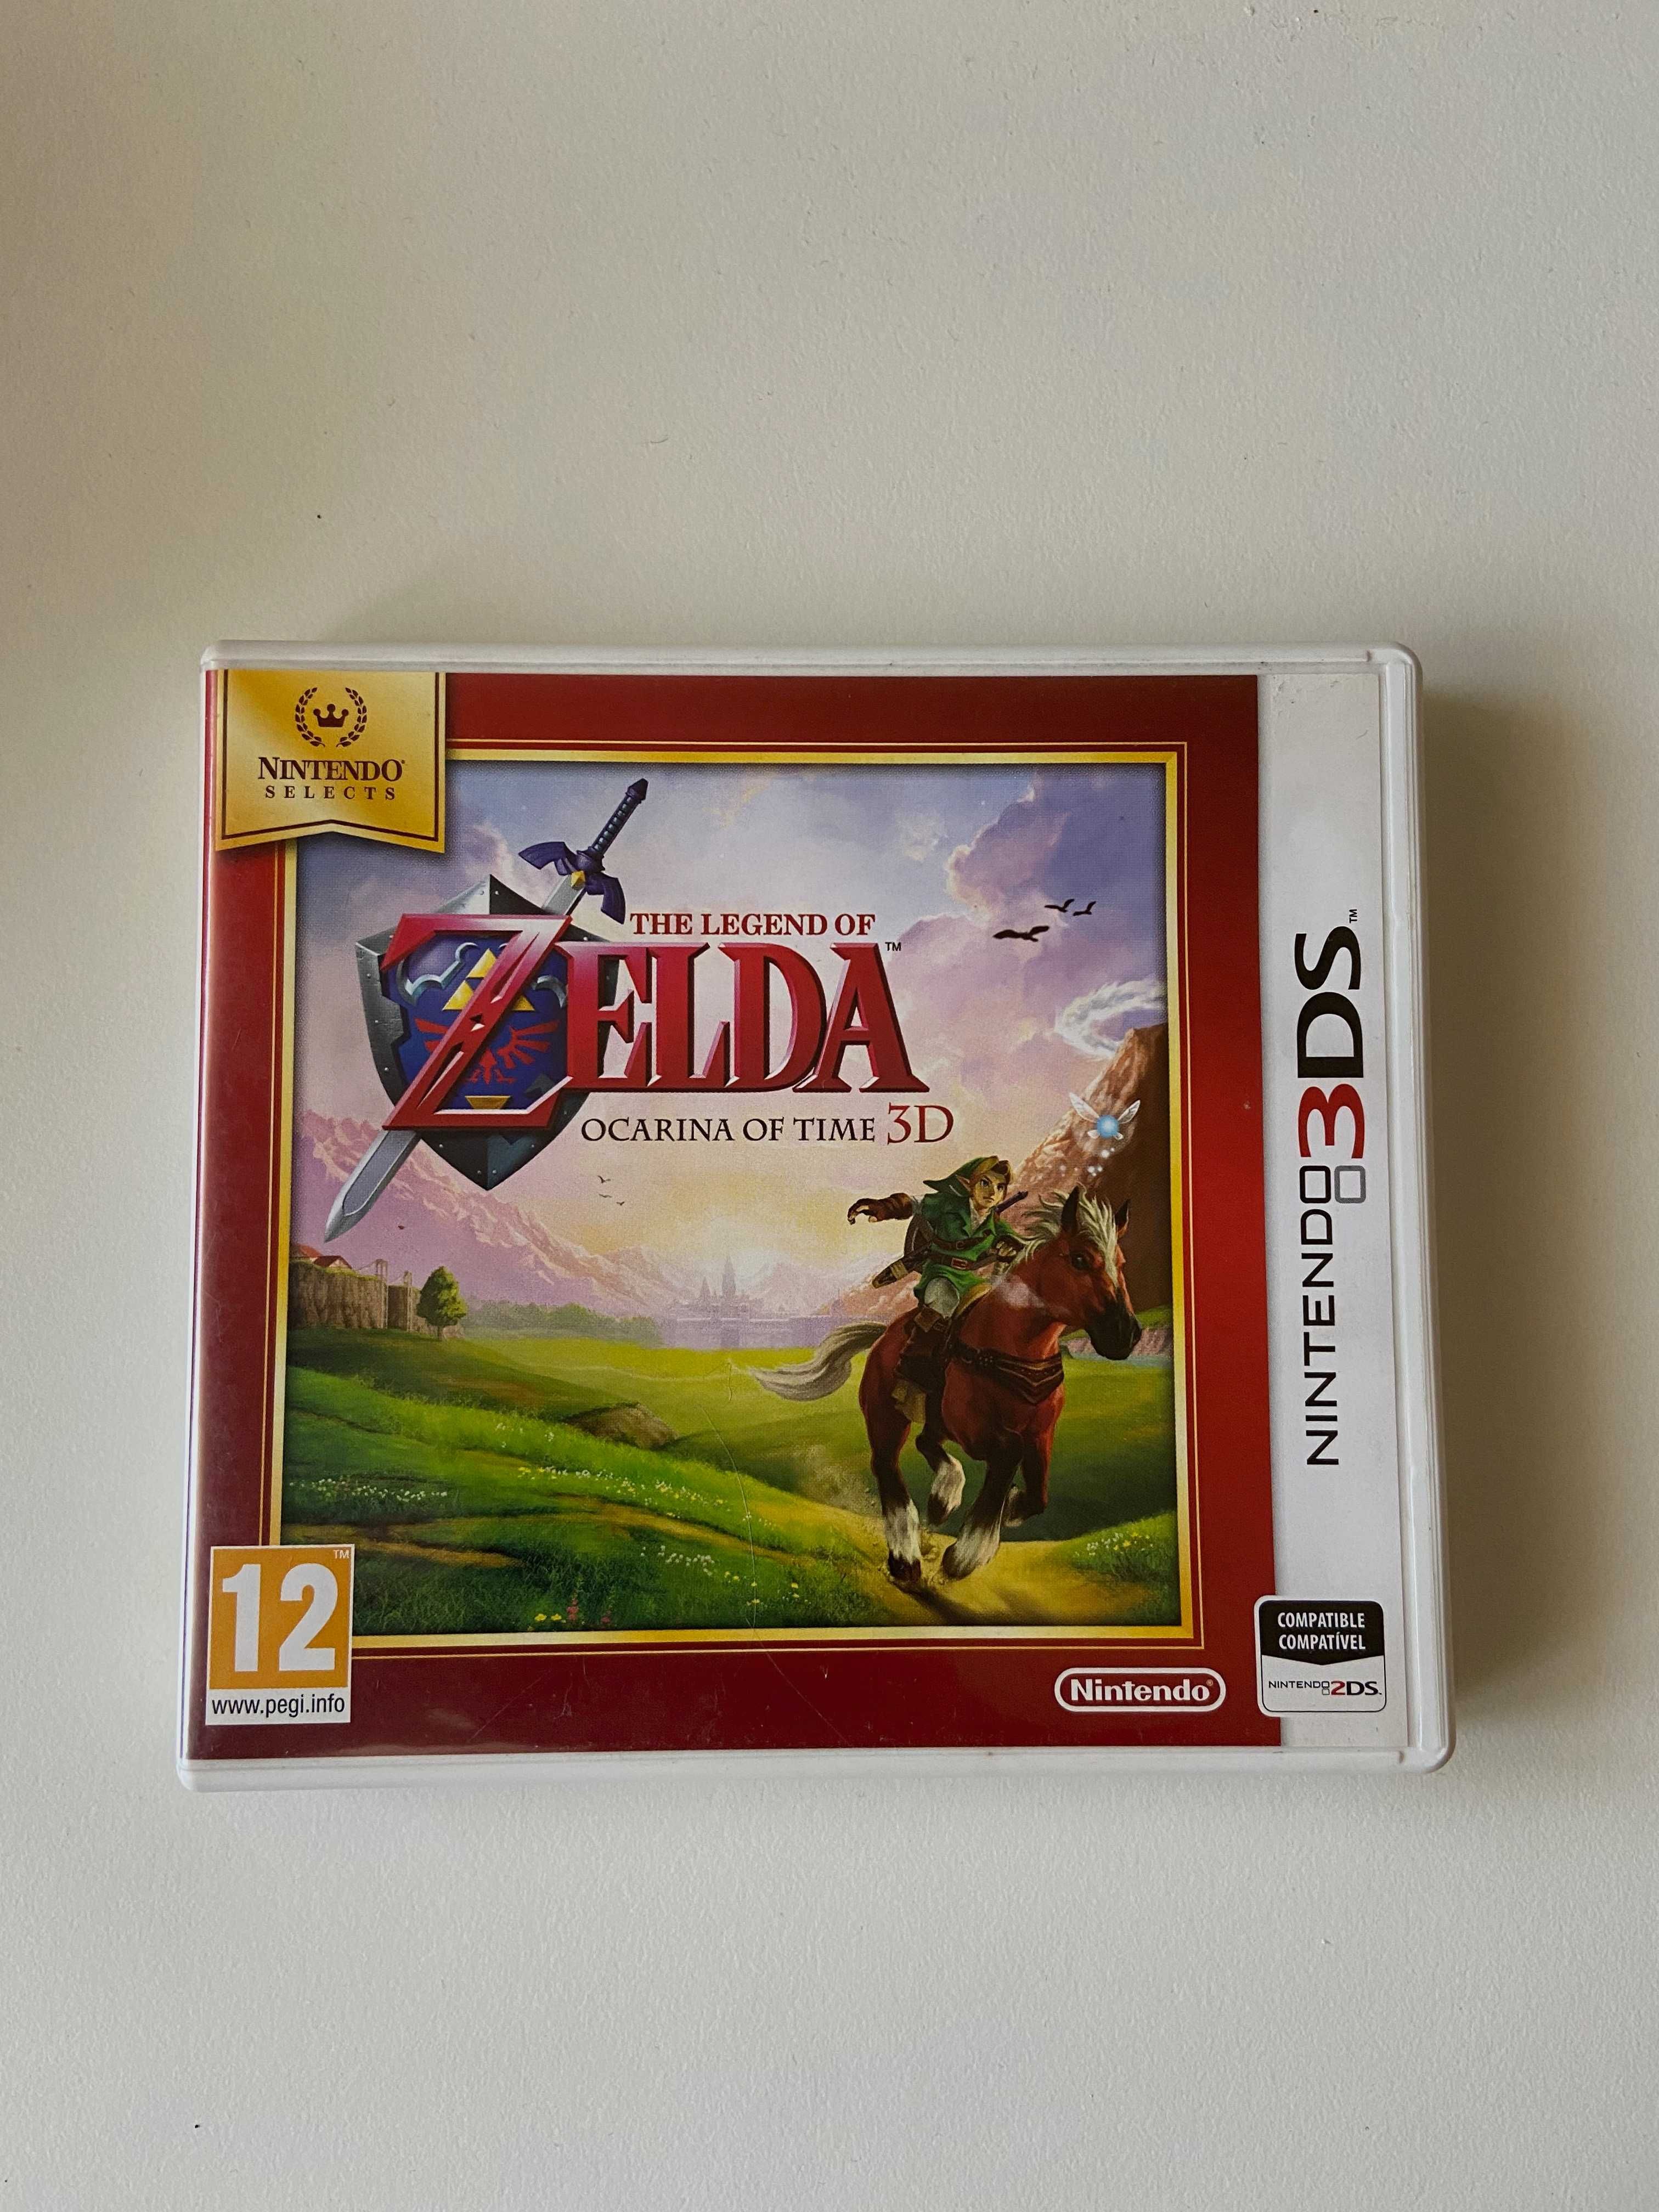 The Legend of Zelda: Acarina of Time 3D